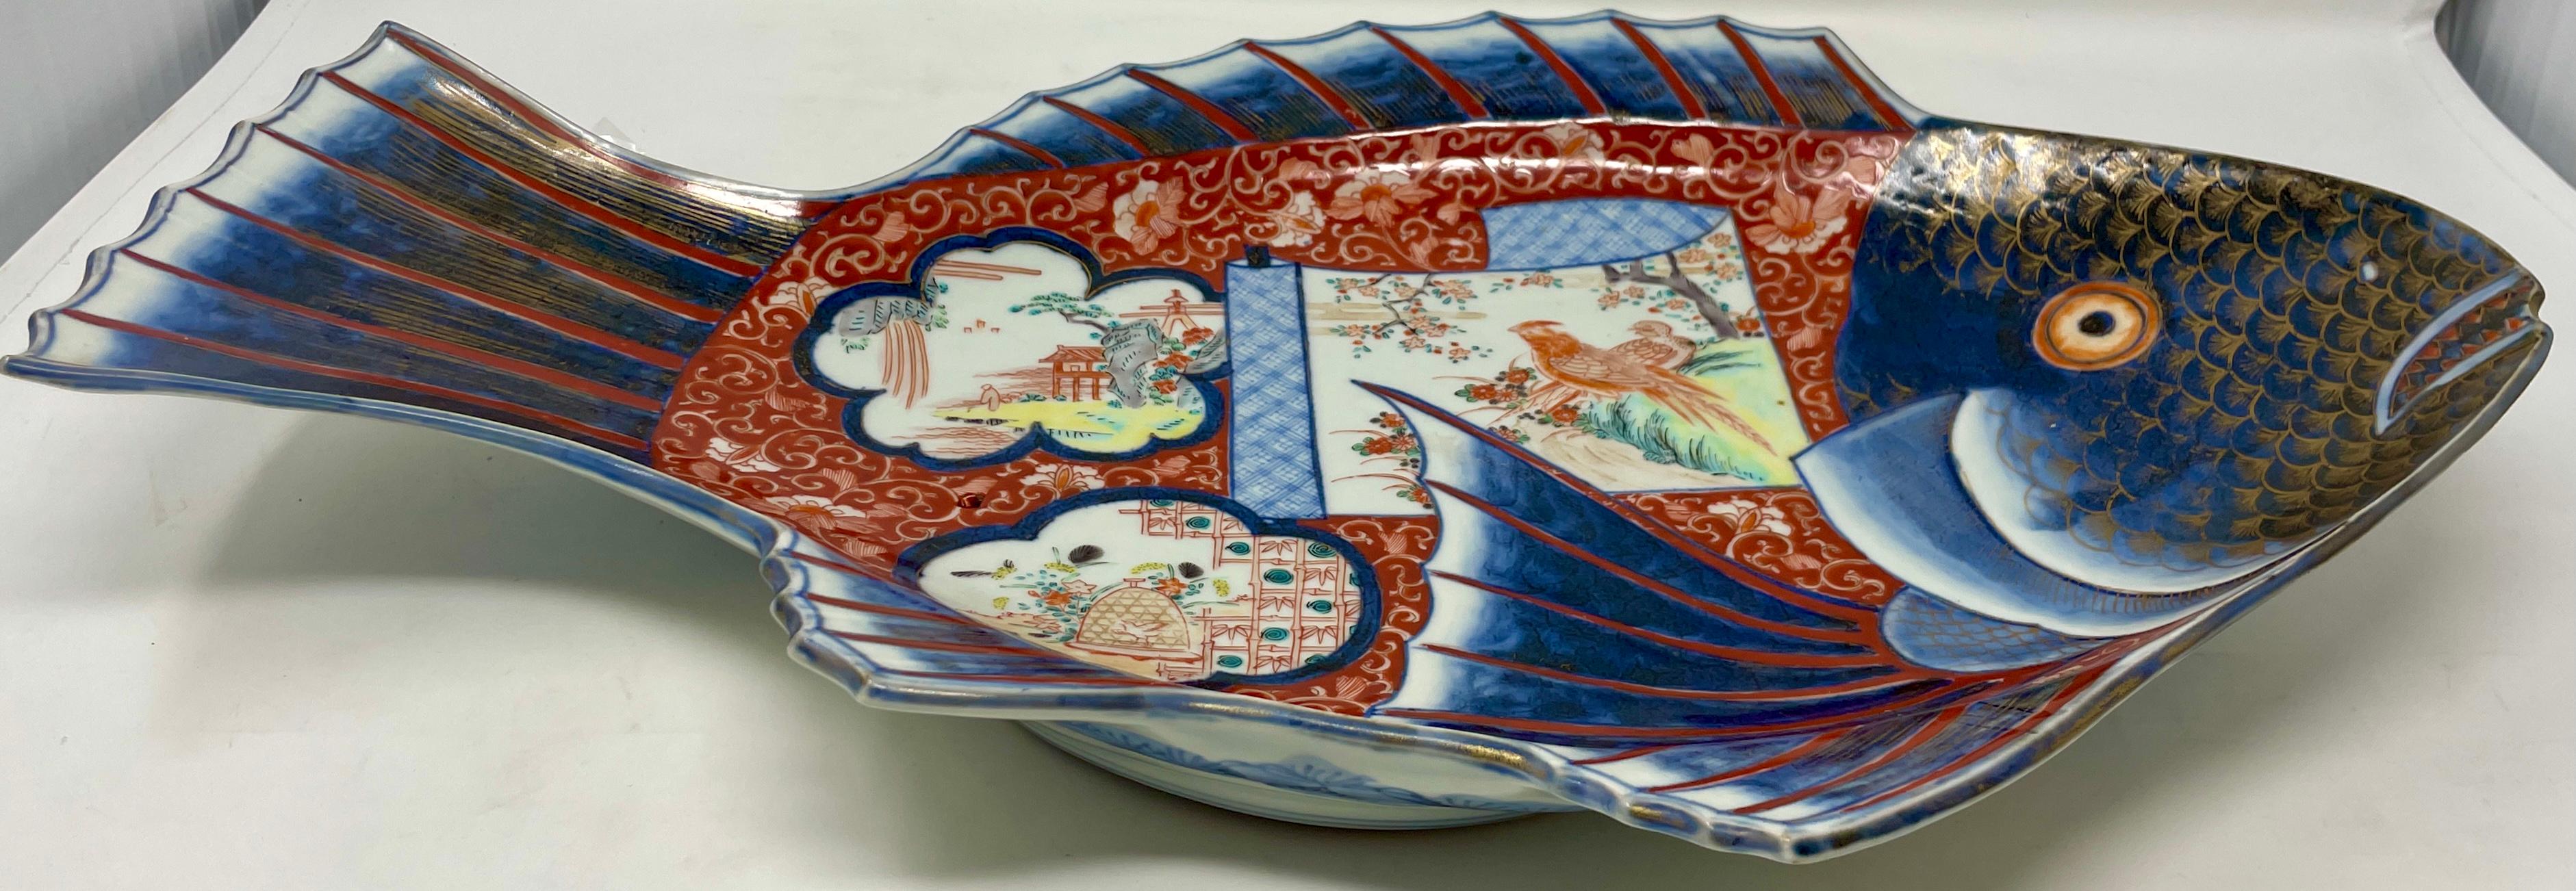 Antique late 19th century Japanese porcelain fish-shaped platter, circa 1890-1910.